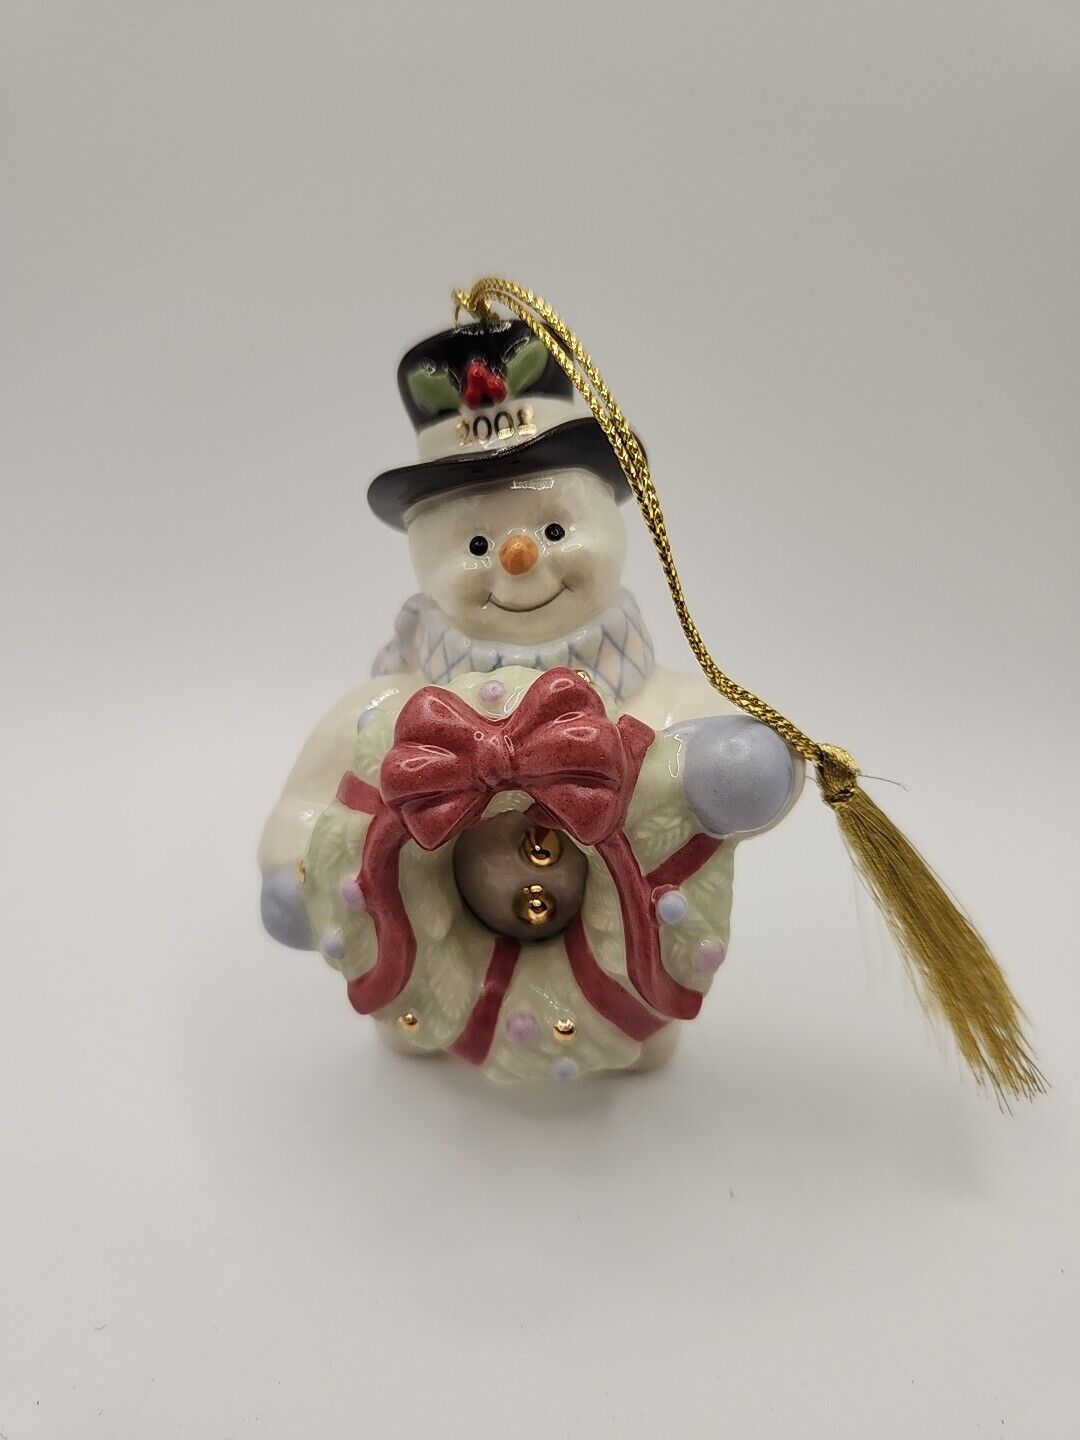 LENOX 2008 annual SNOWMAN Ornament - Decorating For Christmas In Original Box